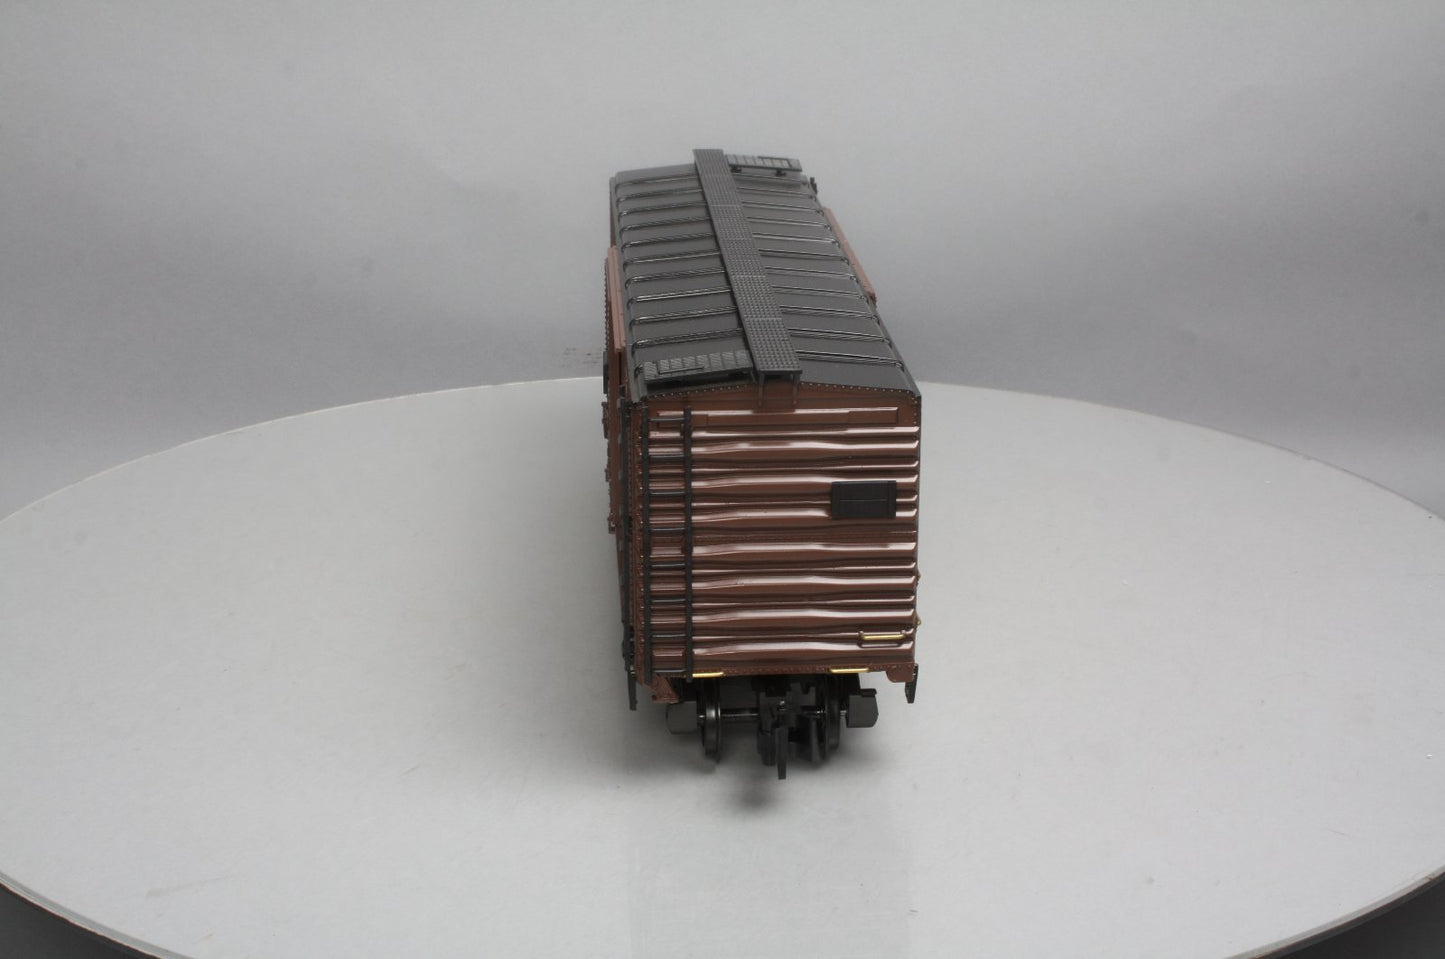 Aristo-Craft 46004 G Scale Pennsylvania Boxcar LN/Box